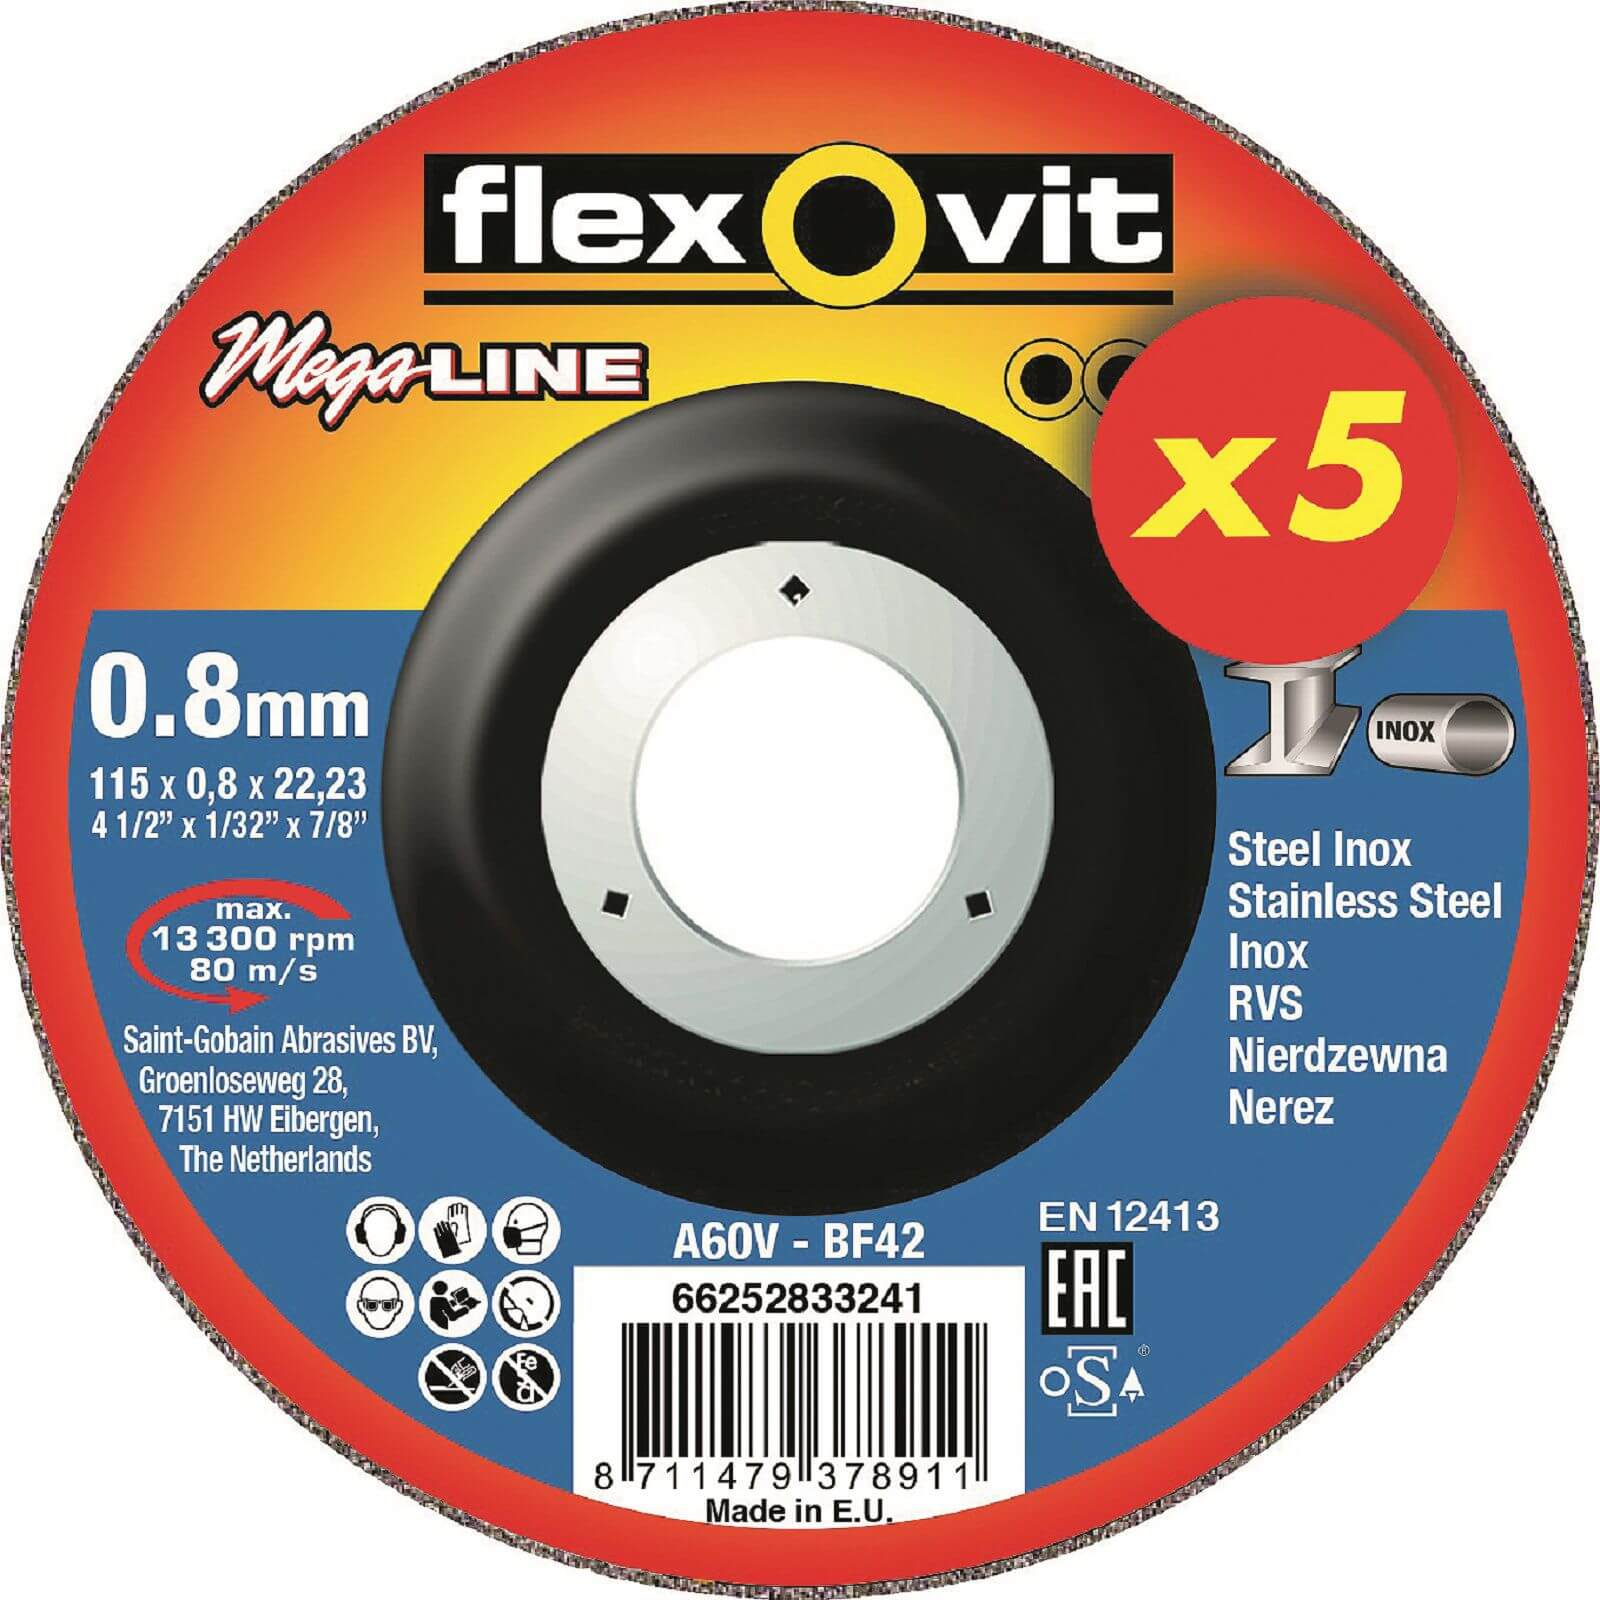 Flexovit Megaline Steel Inox Cutting Off Wheel - 115mm - 5 Pack